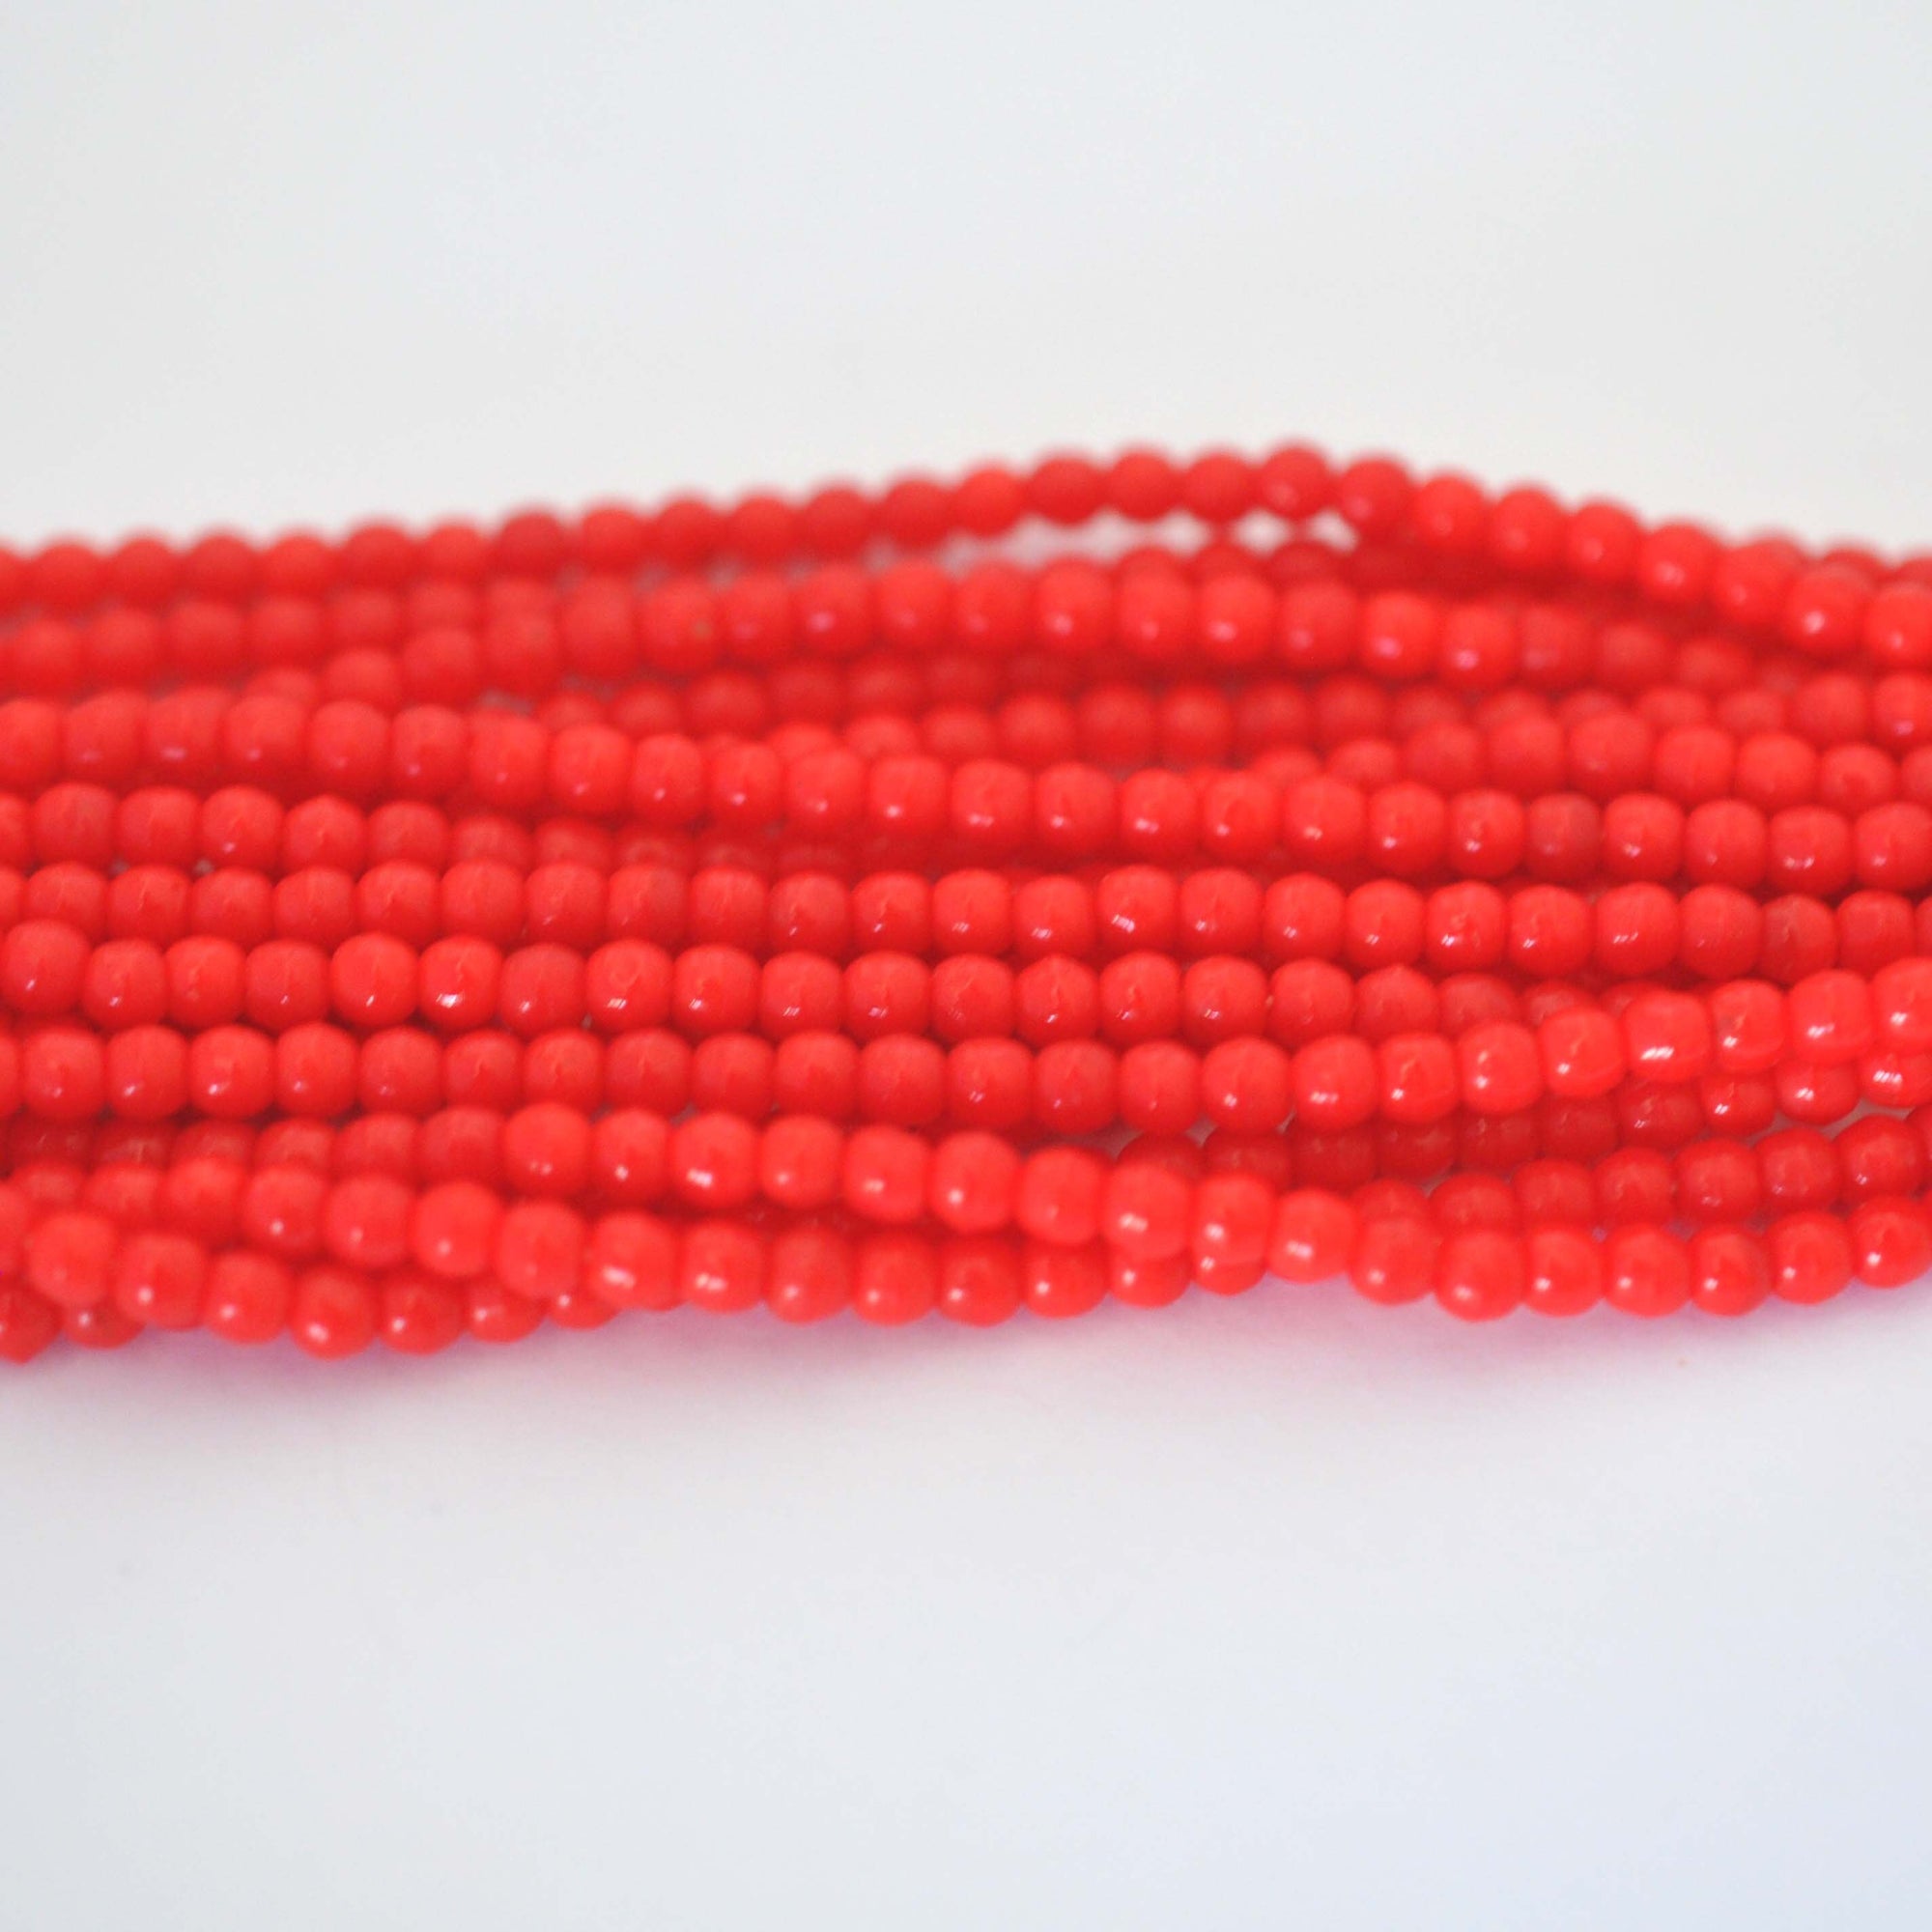 Bright Red 3MM Round Glass Beads Vintage Cherry Brand - 100 Beads